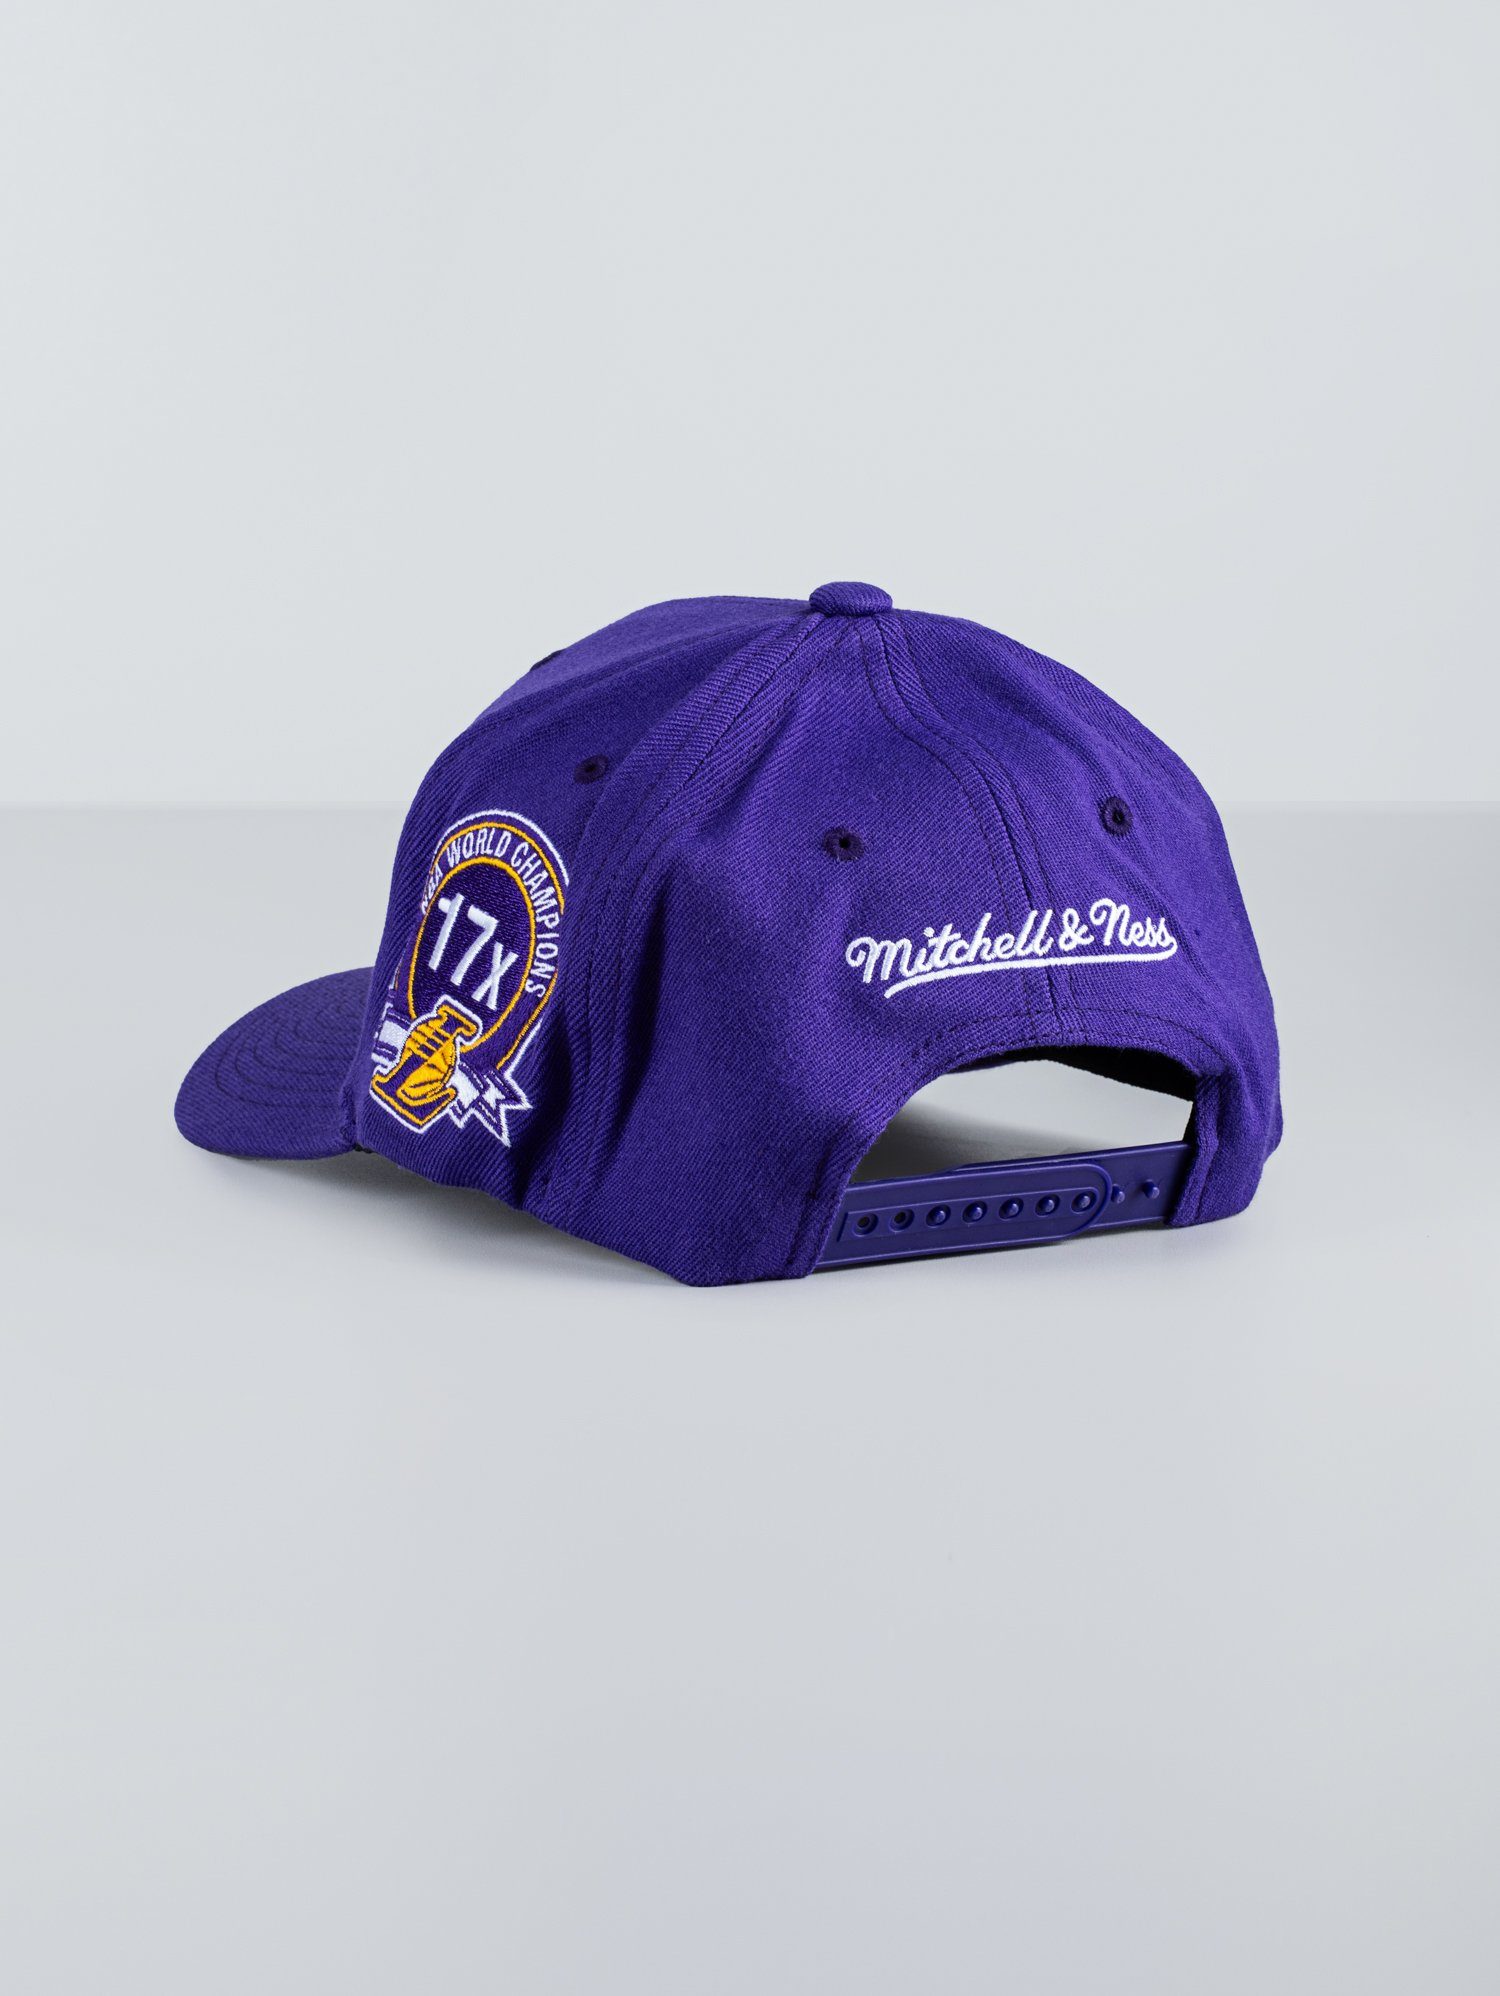 Ness Town Snapback Snapback Mitchell & Home & Mitchell Ness Classic NBA Purple Cap